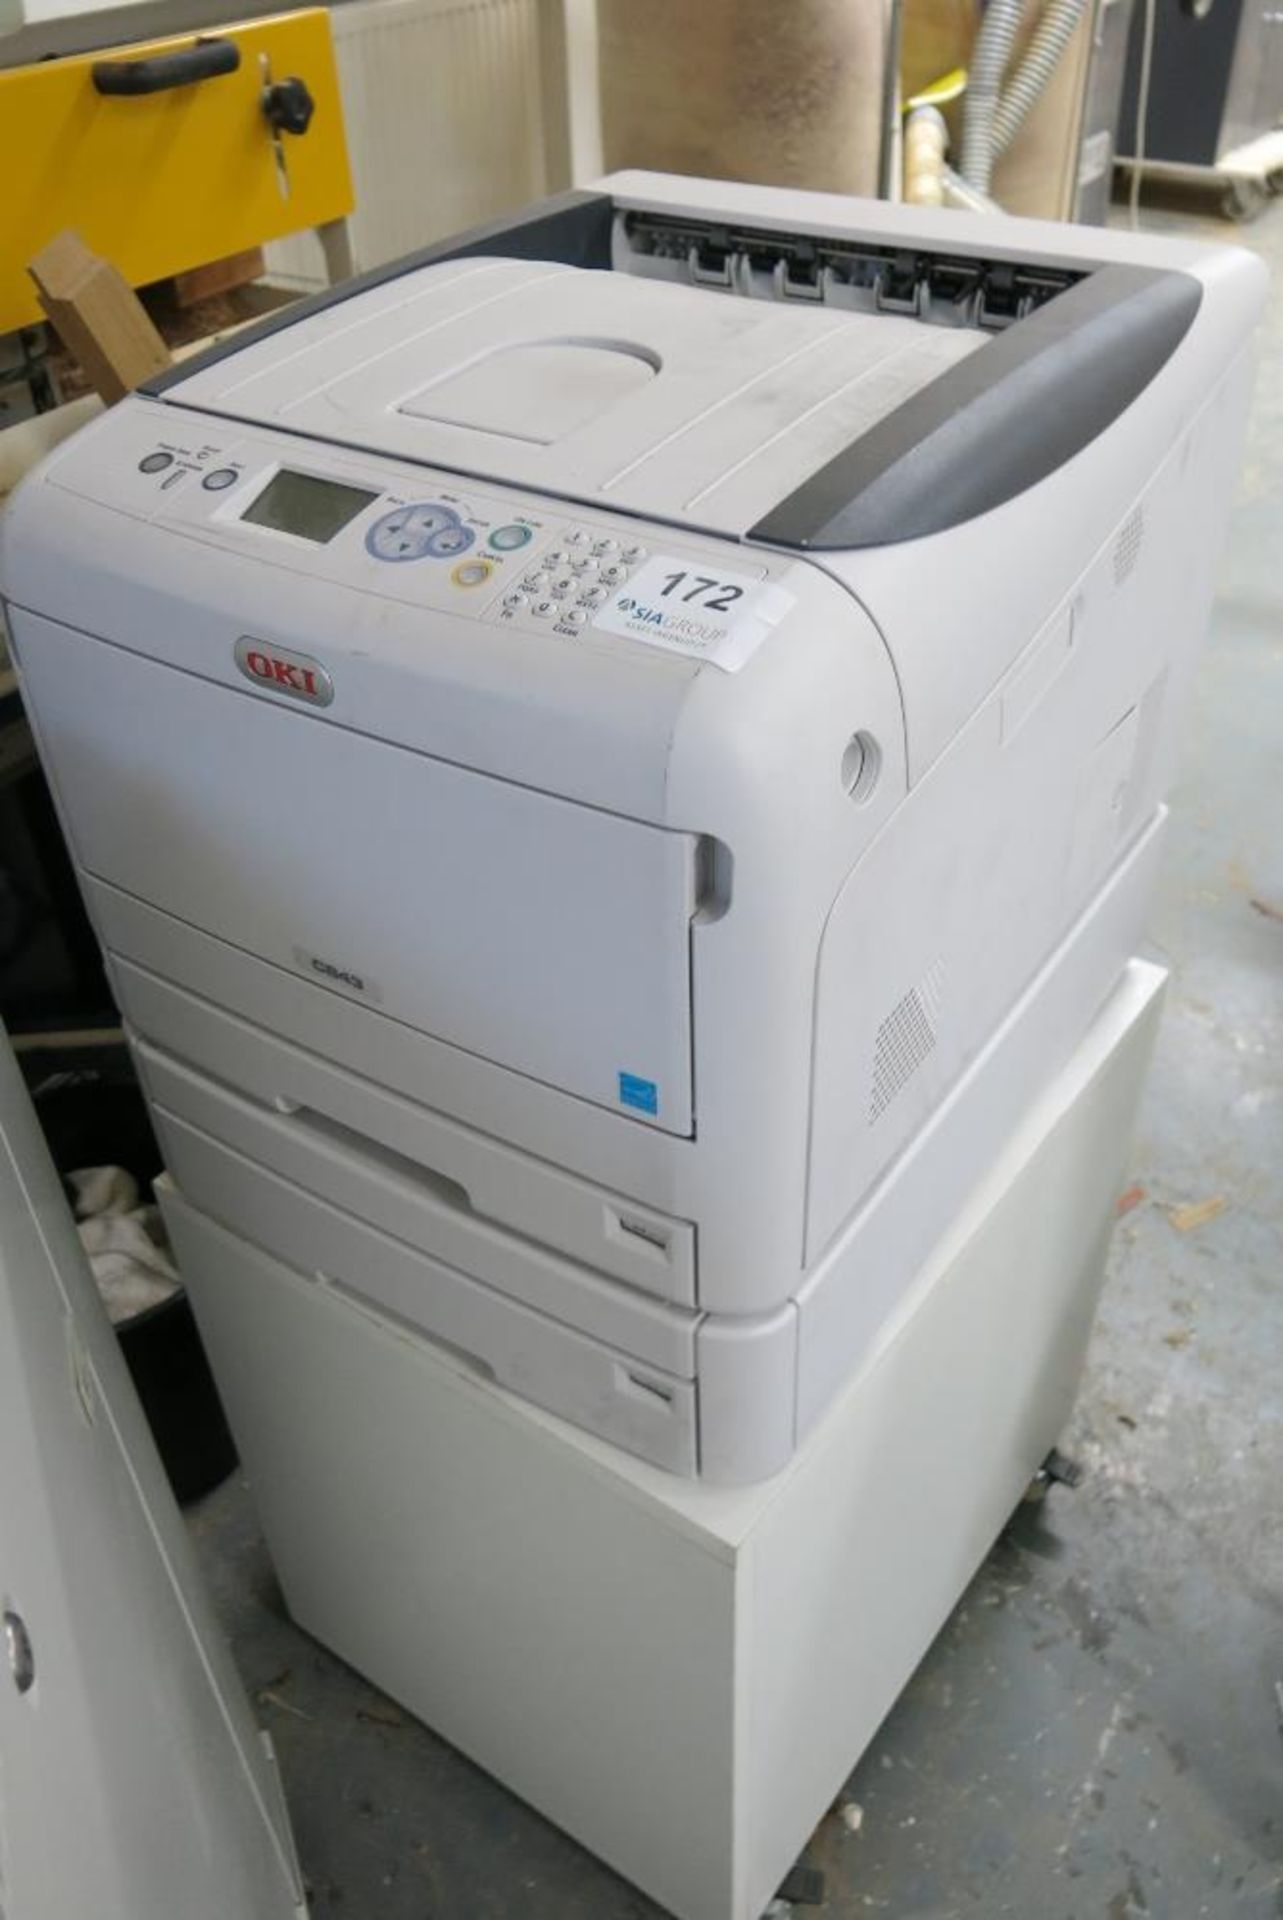 OKI C843 laser printer